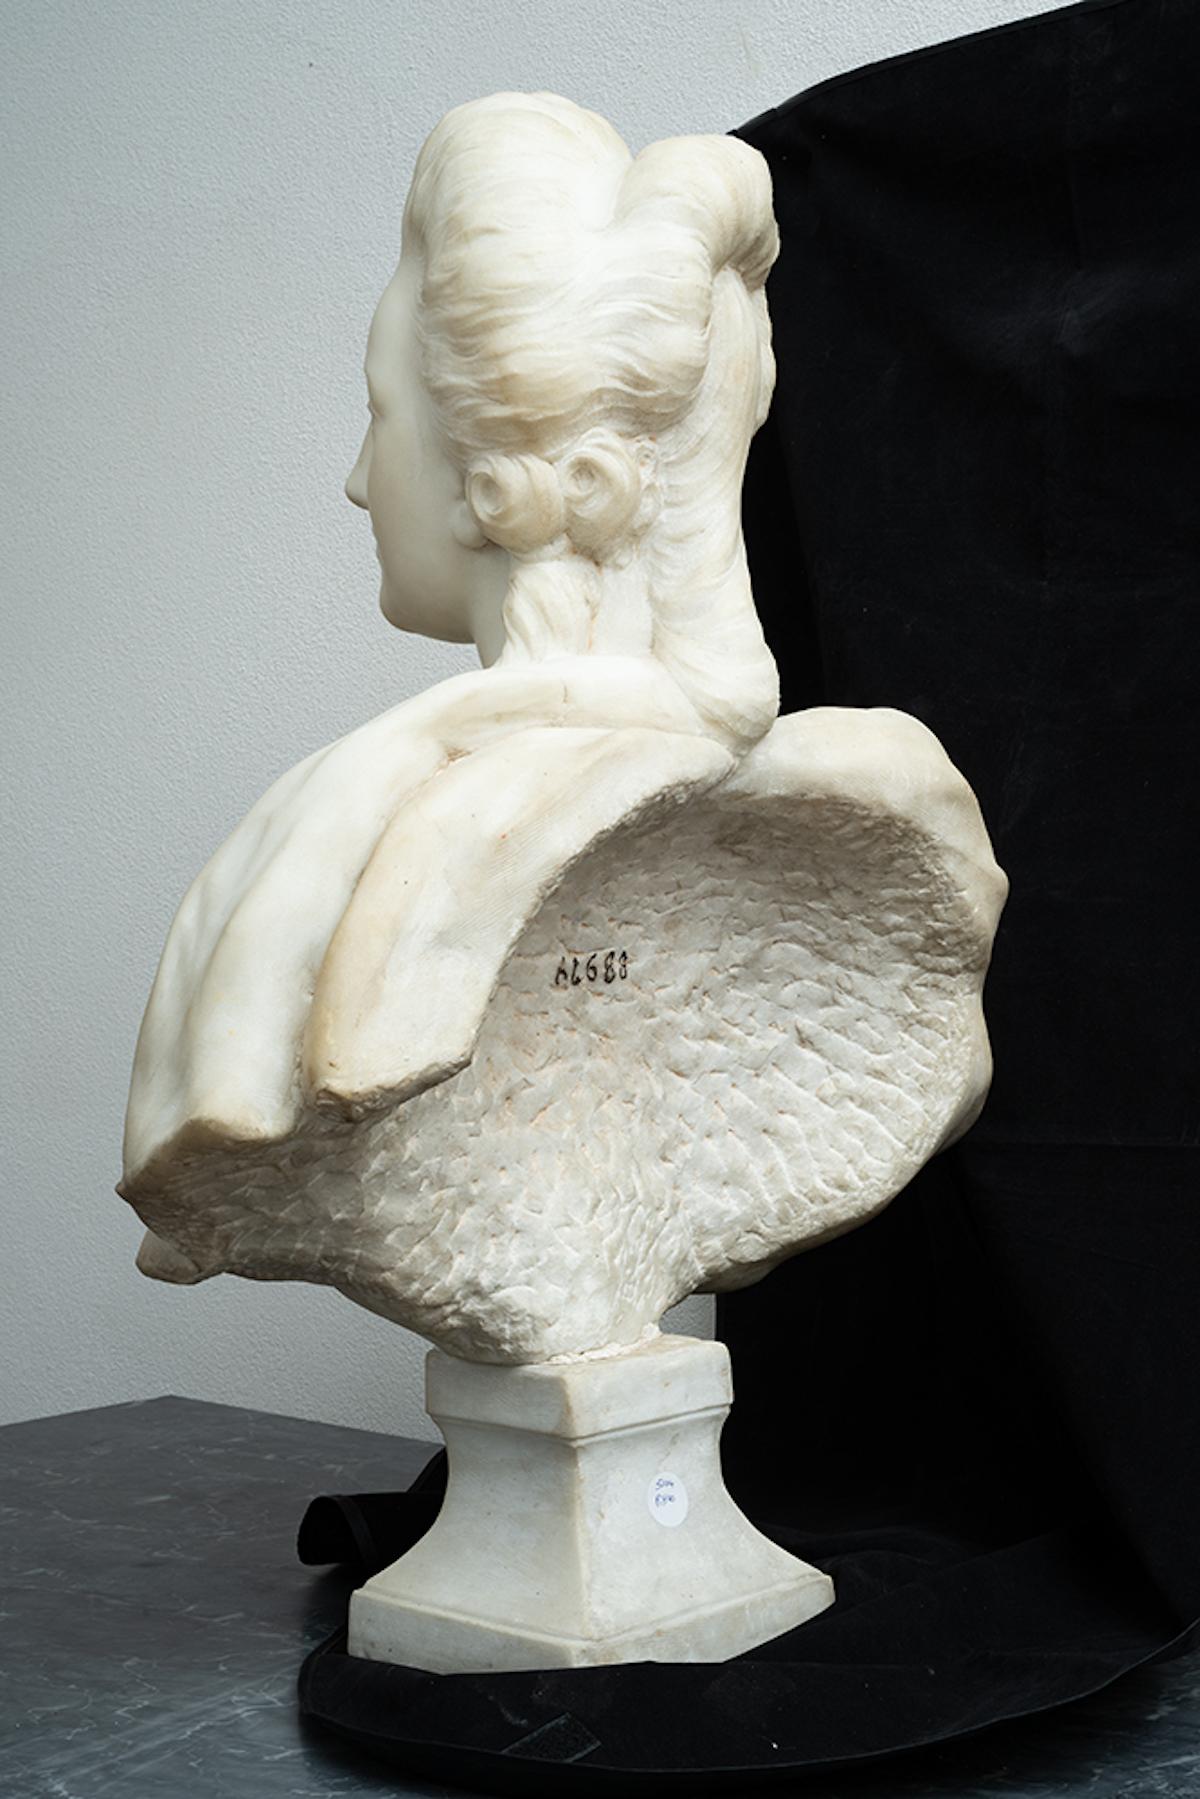 Antique white marble statuary sculpture depicting Marie Antoinette. - Black Figurative Sculpture by Unknown